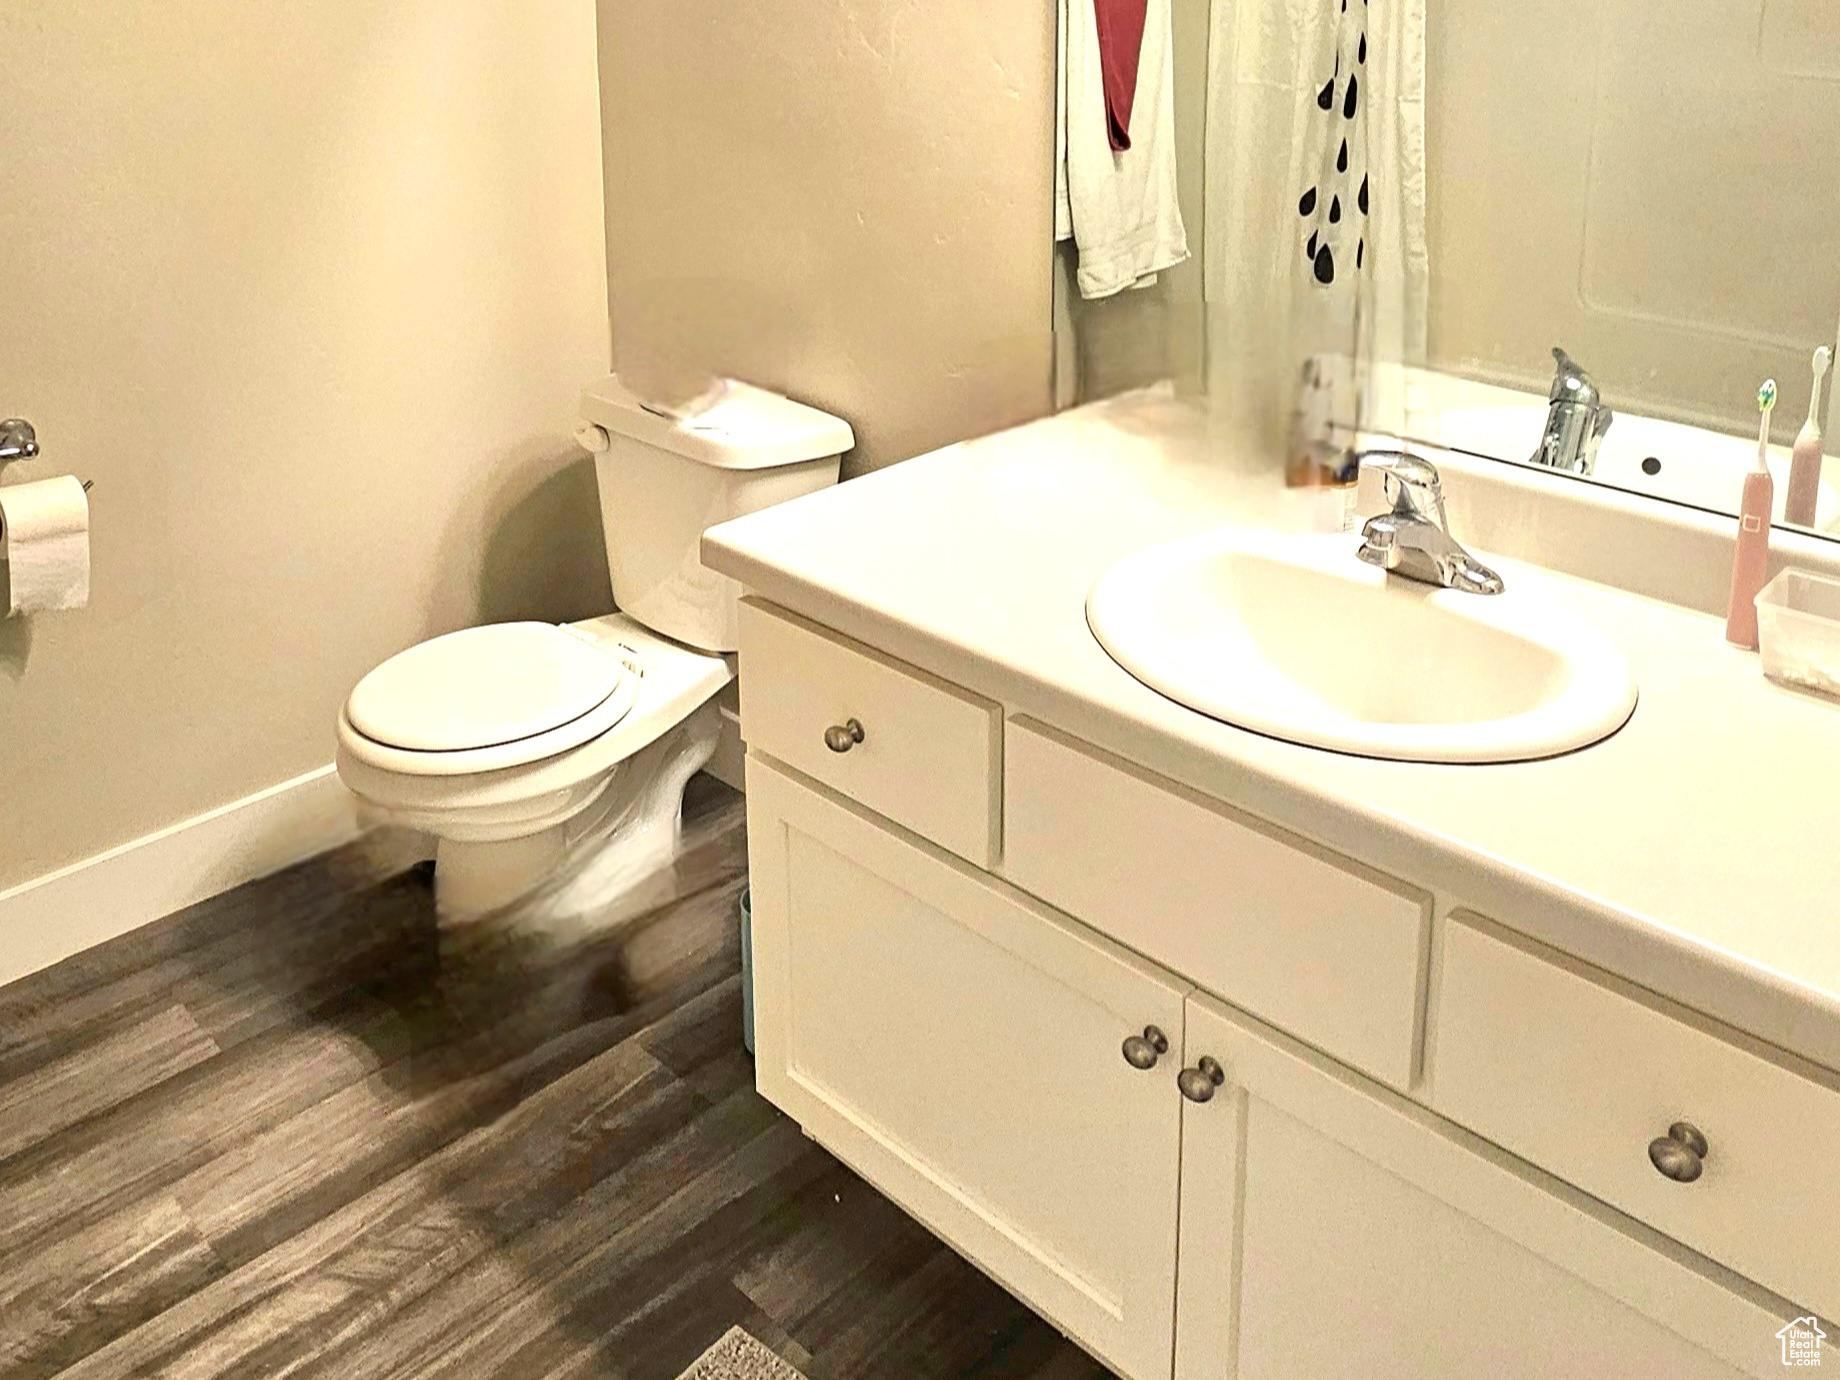 Hall Bathroom #2 with wood-type flooring, vanity, and toilet